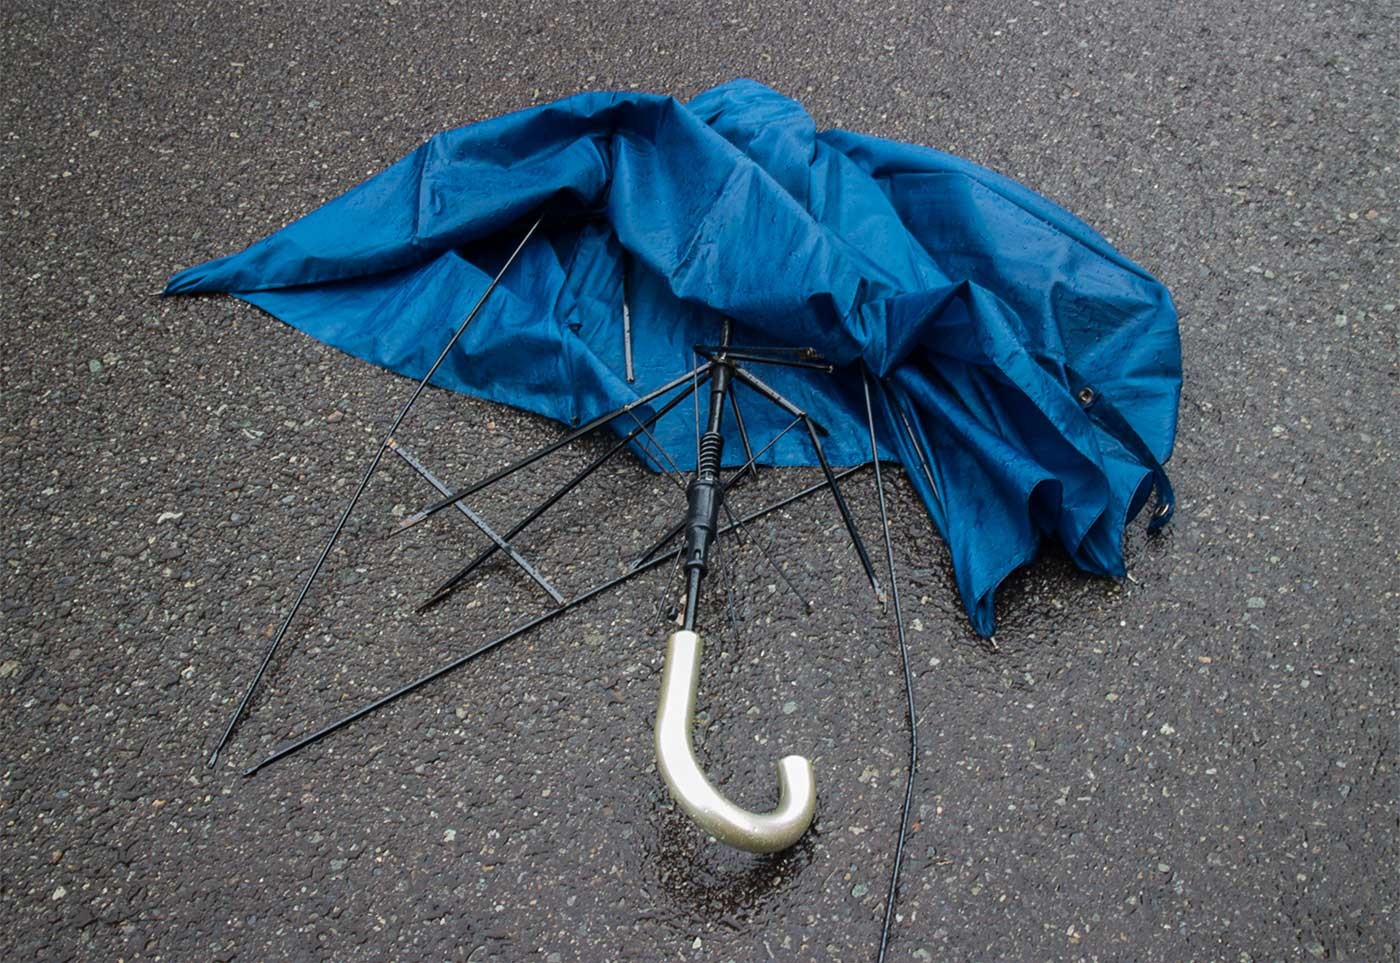 Одолжил ей зонтик. Сломанный зонтик. Рваный зонт. Поломанный зонт. Порванный зонтик.